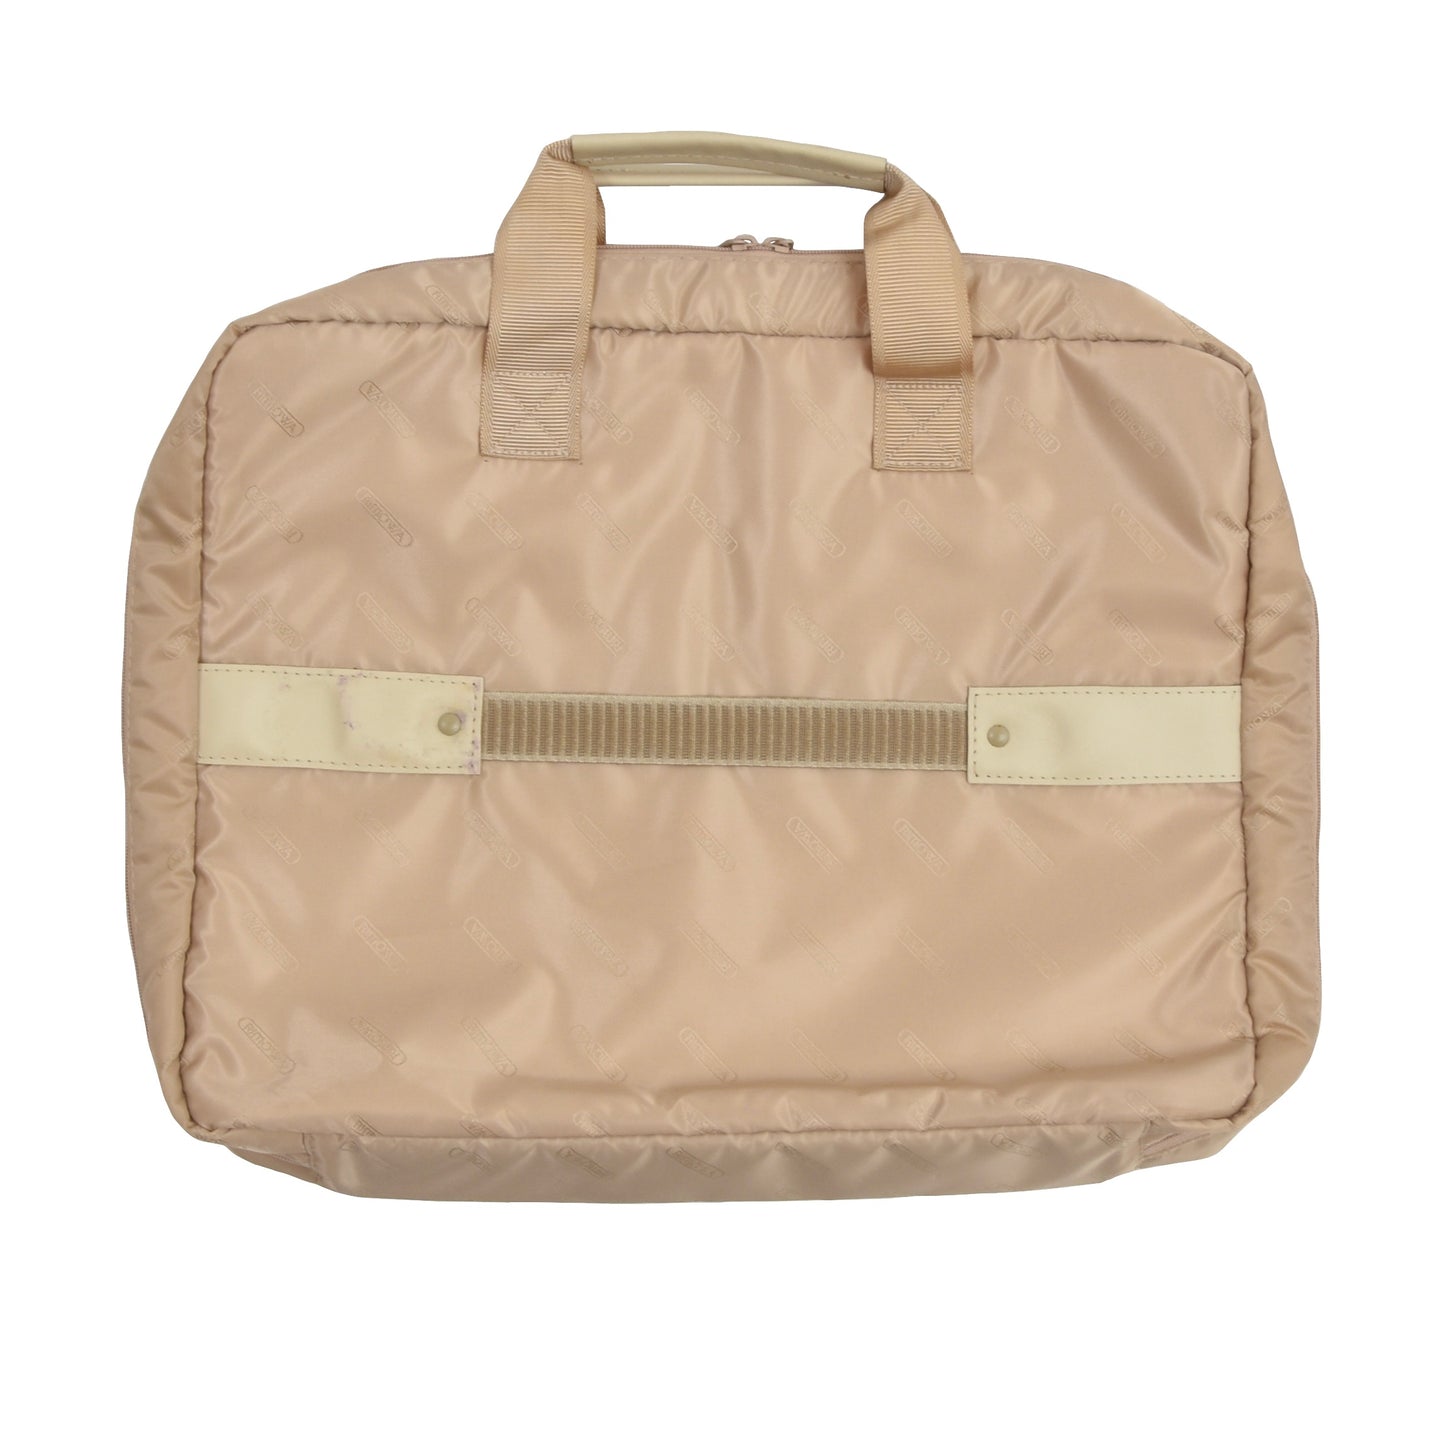 Rimowa Soft-Sided Laptop Bag - Beige